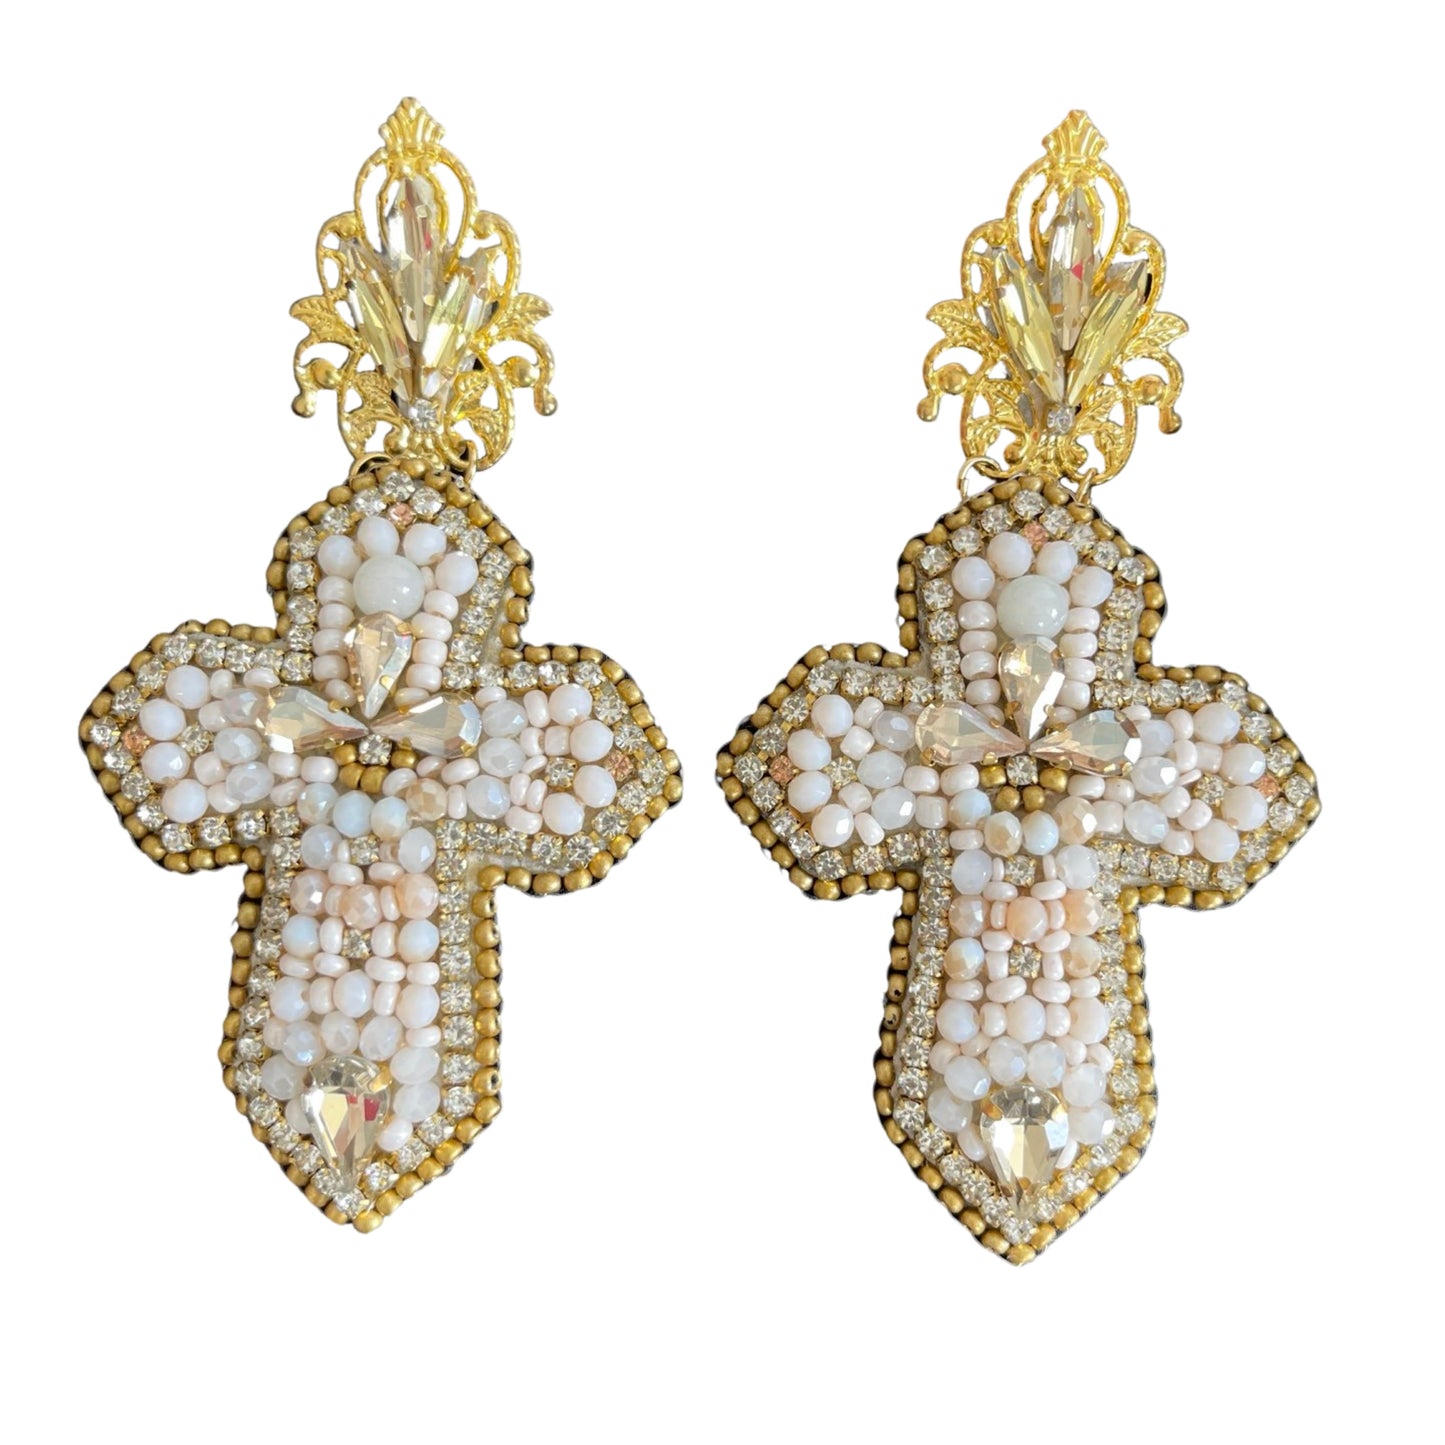 05. White cross earrings